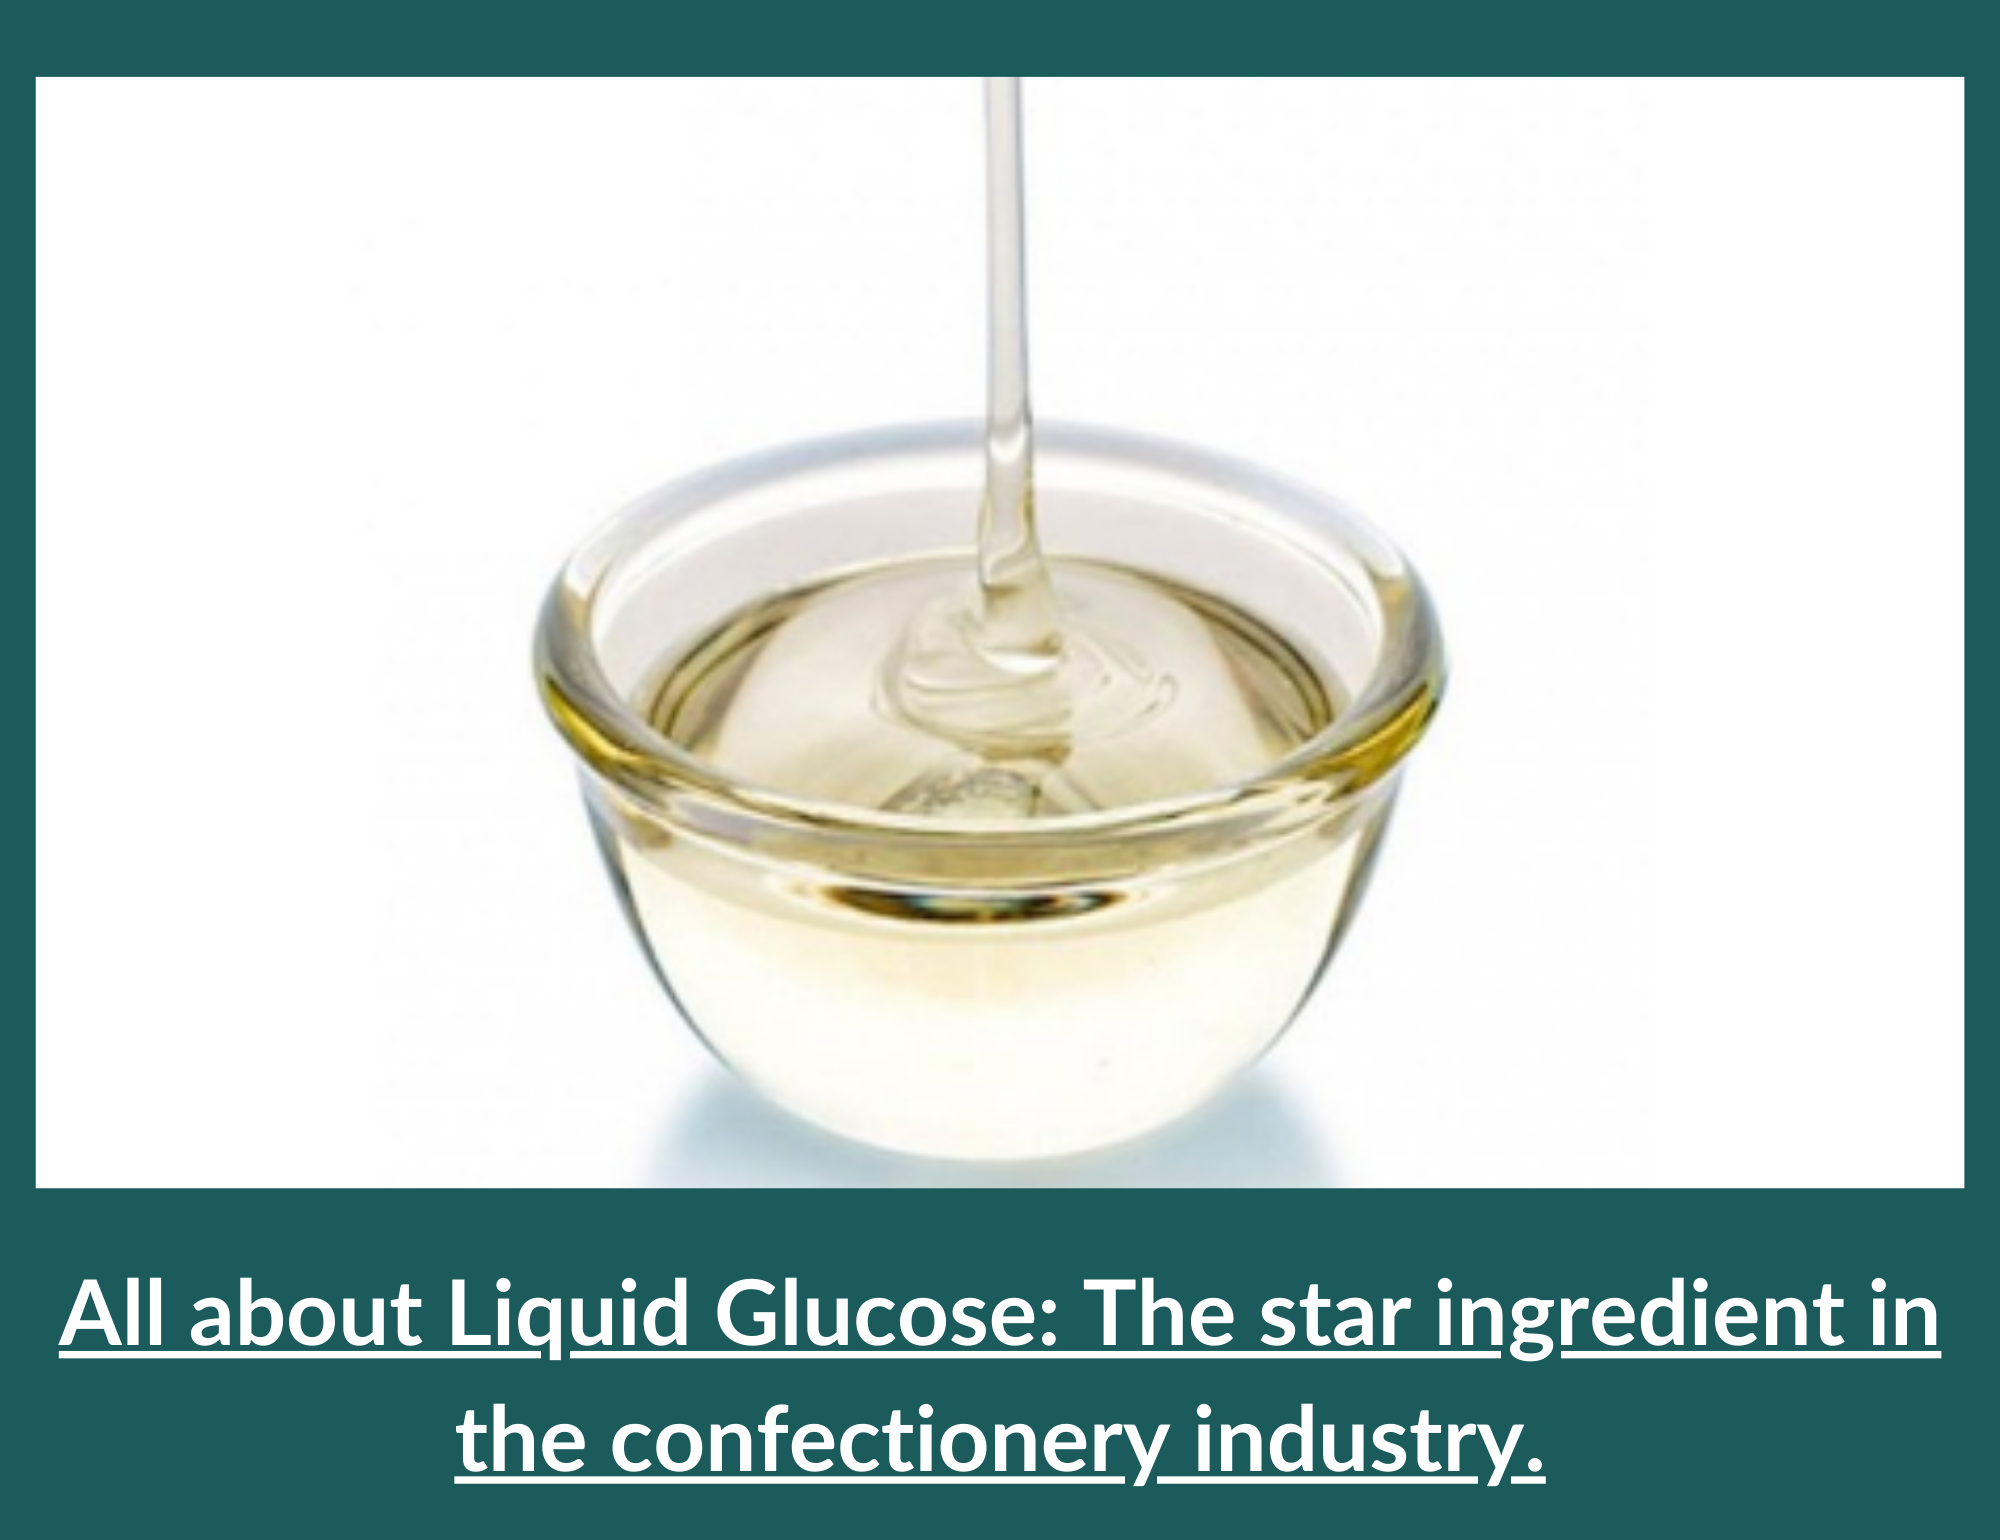 Liquid Glucose Properties